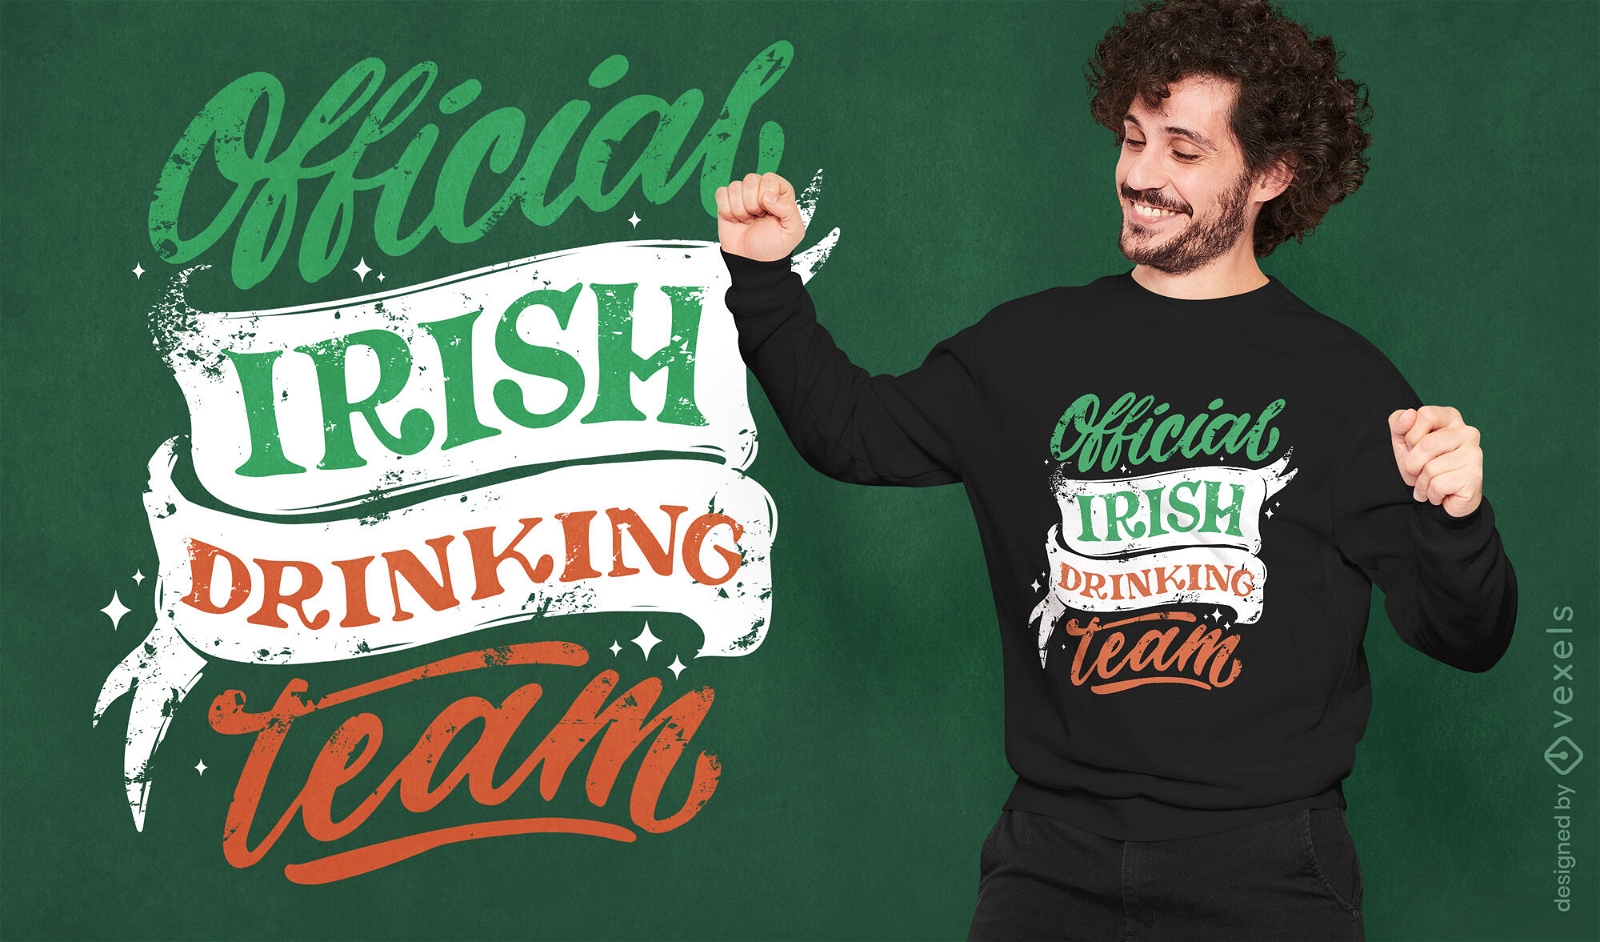 Official irish drinking team t-shirt design